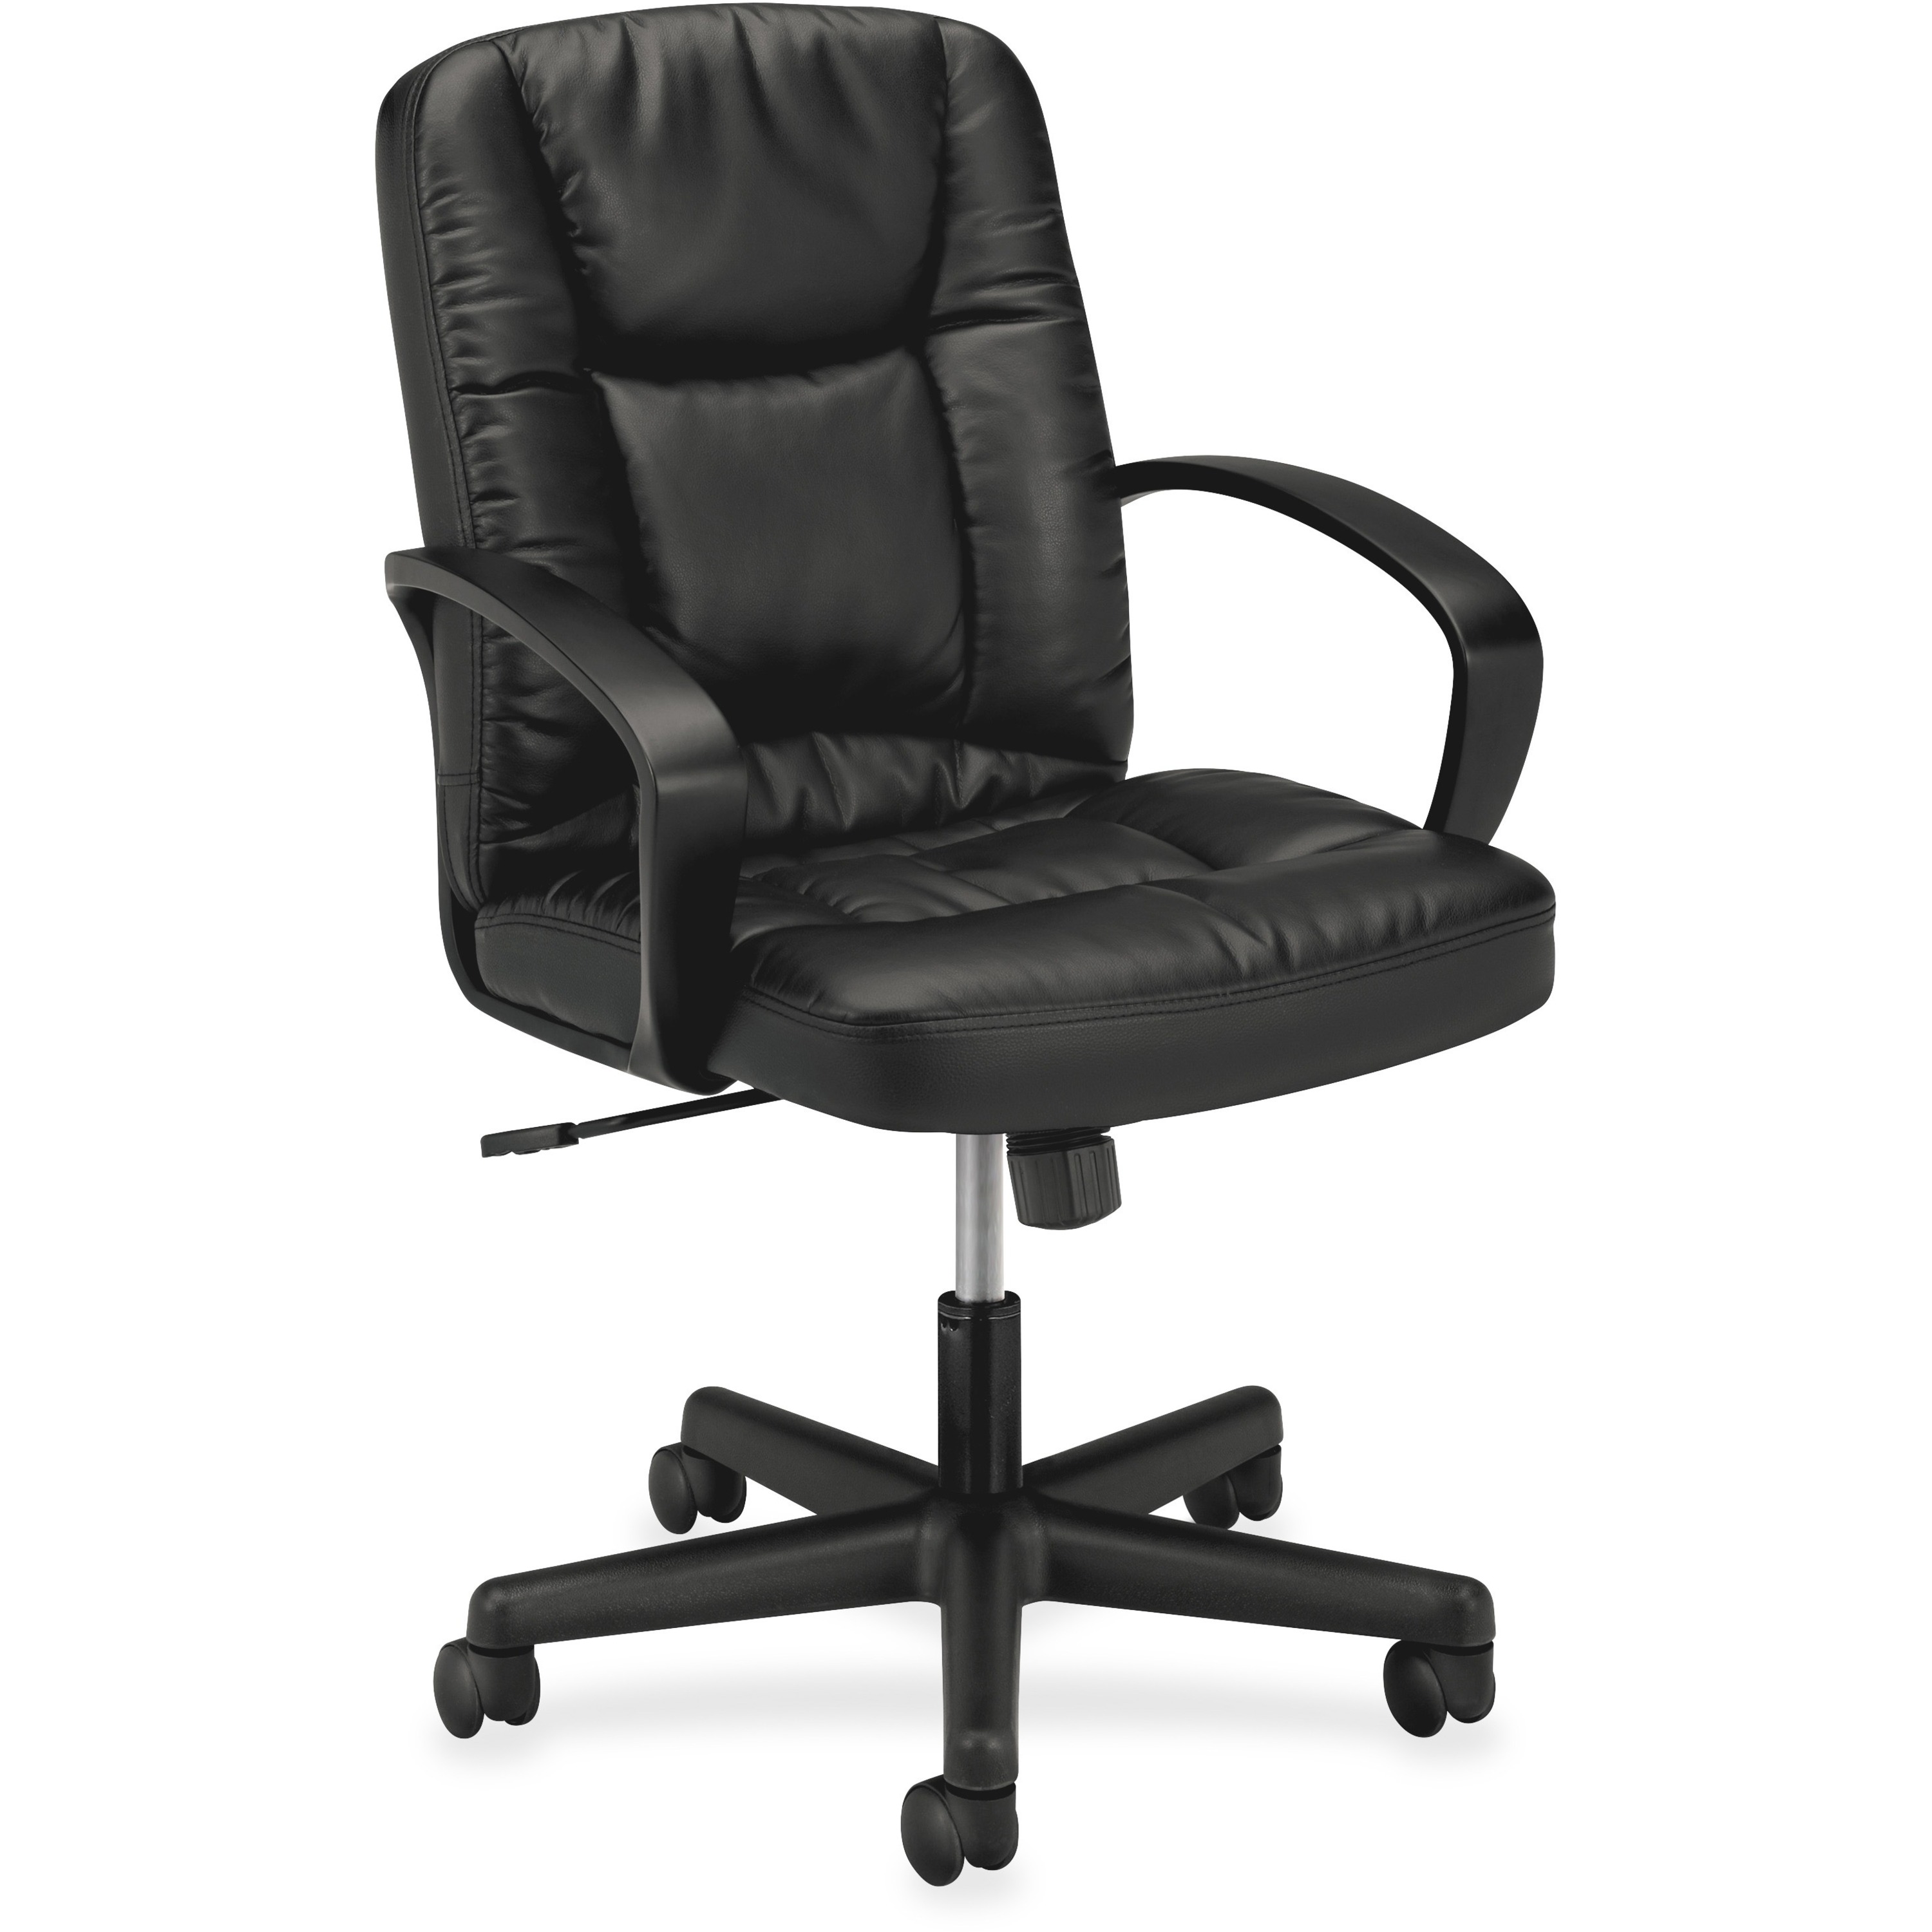 West Coast Office Supplies :: Furniture :: Chairs, Chair Mats